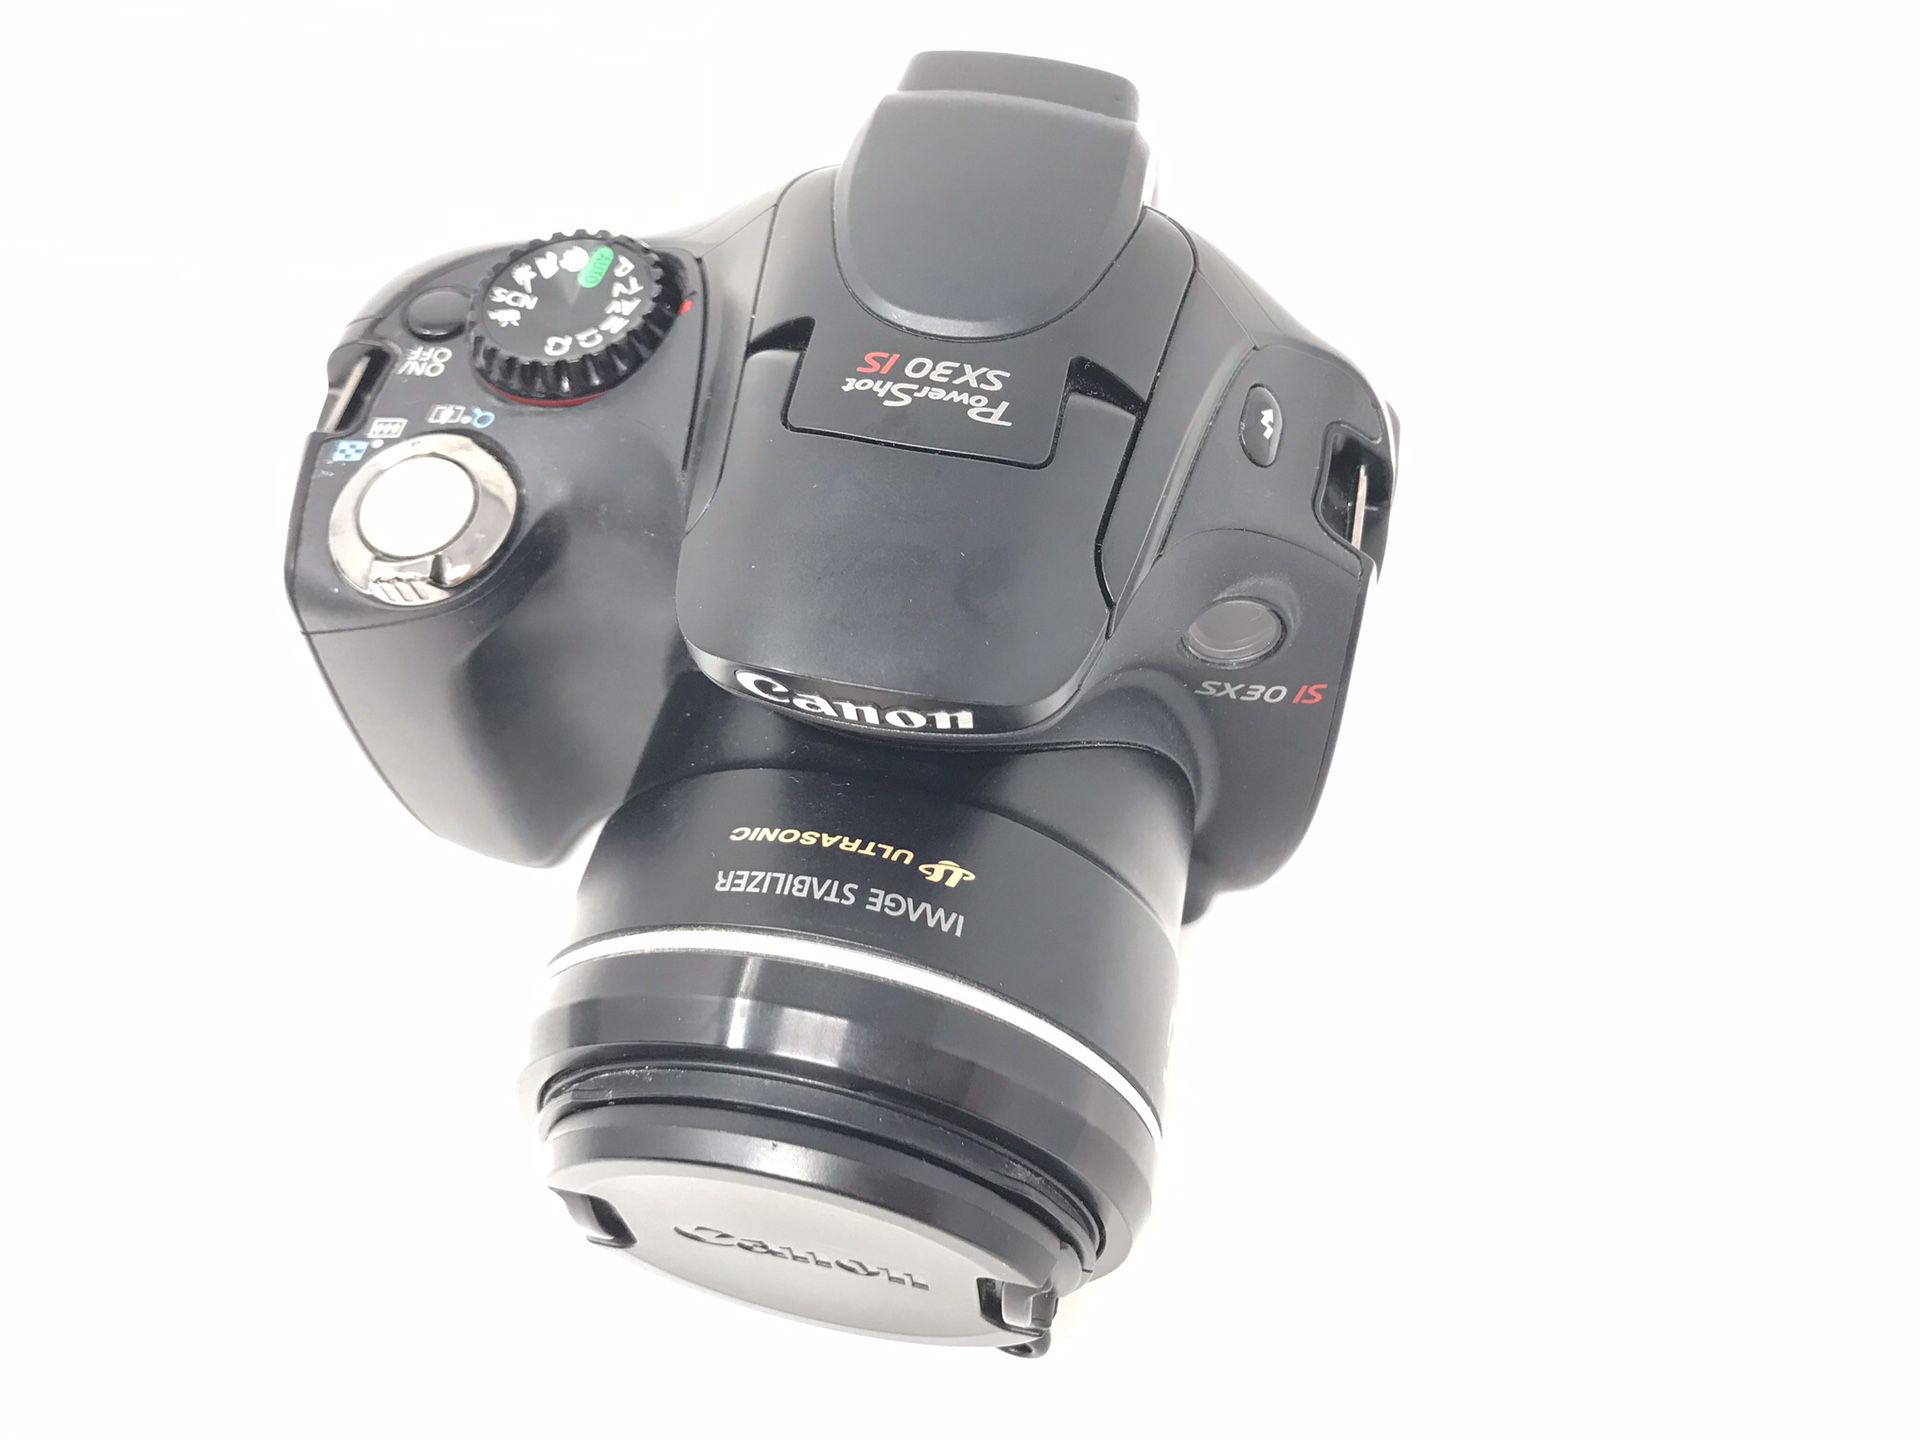 CANON SX30 IS 14 Megapixel Zoom Digital Pro Camera